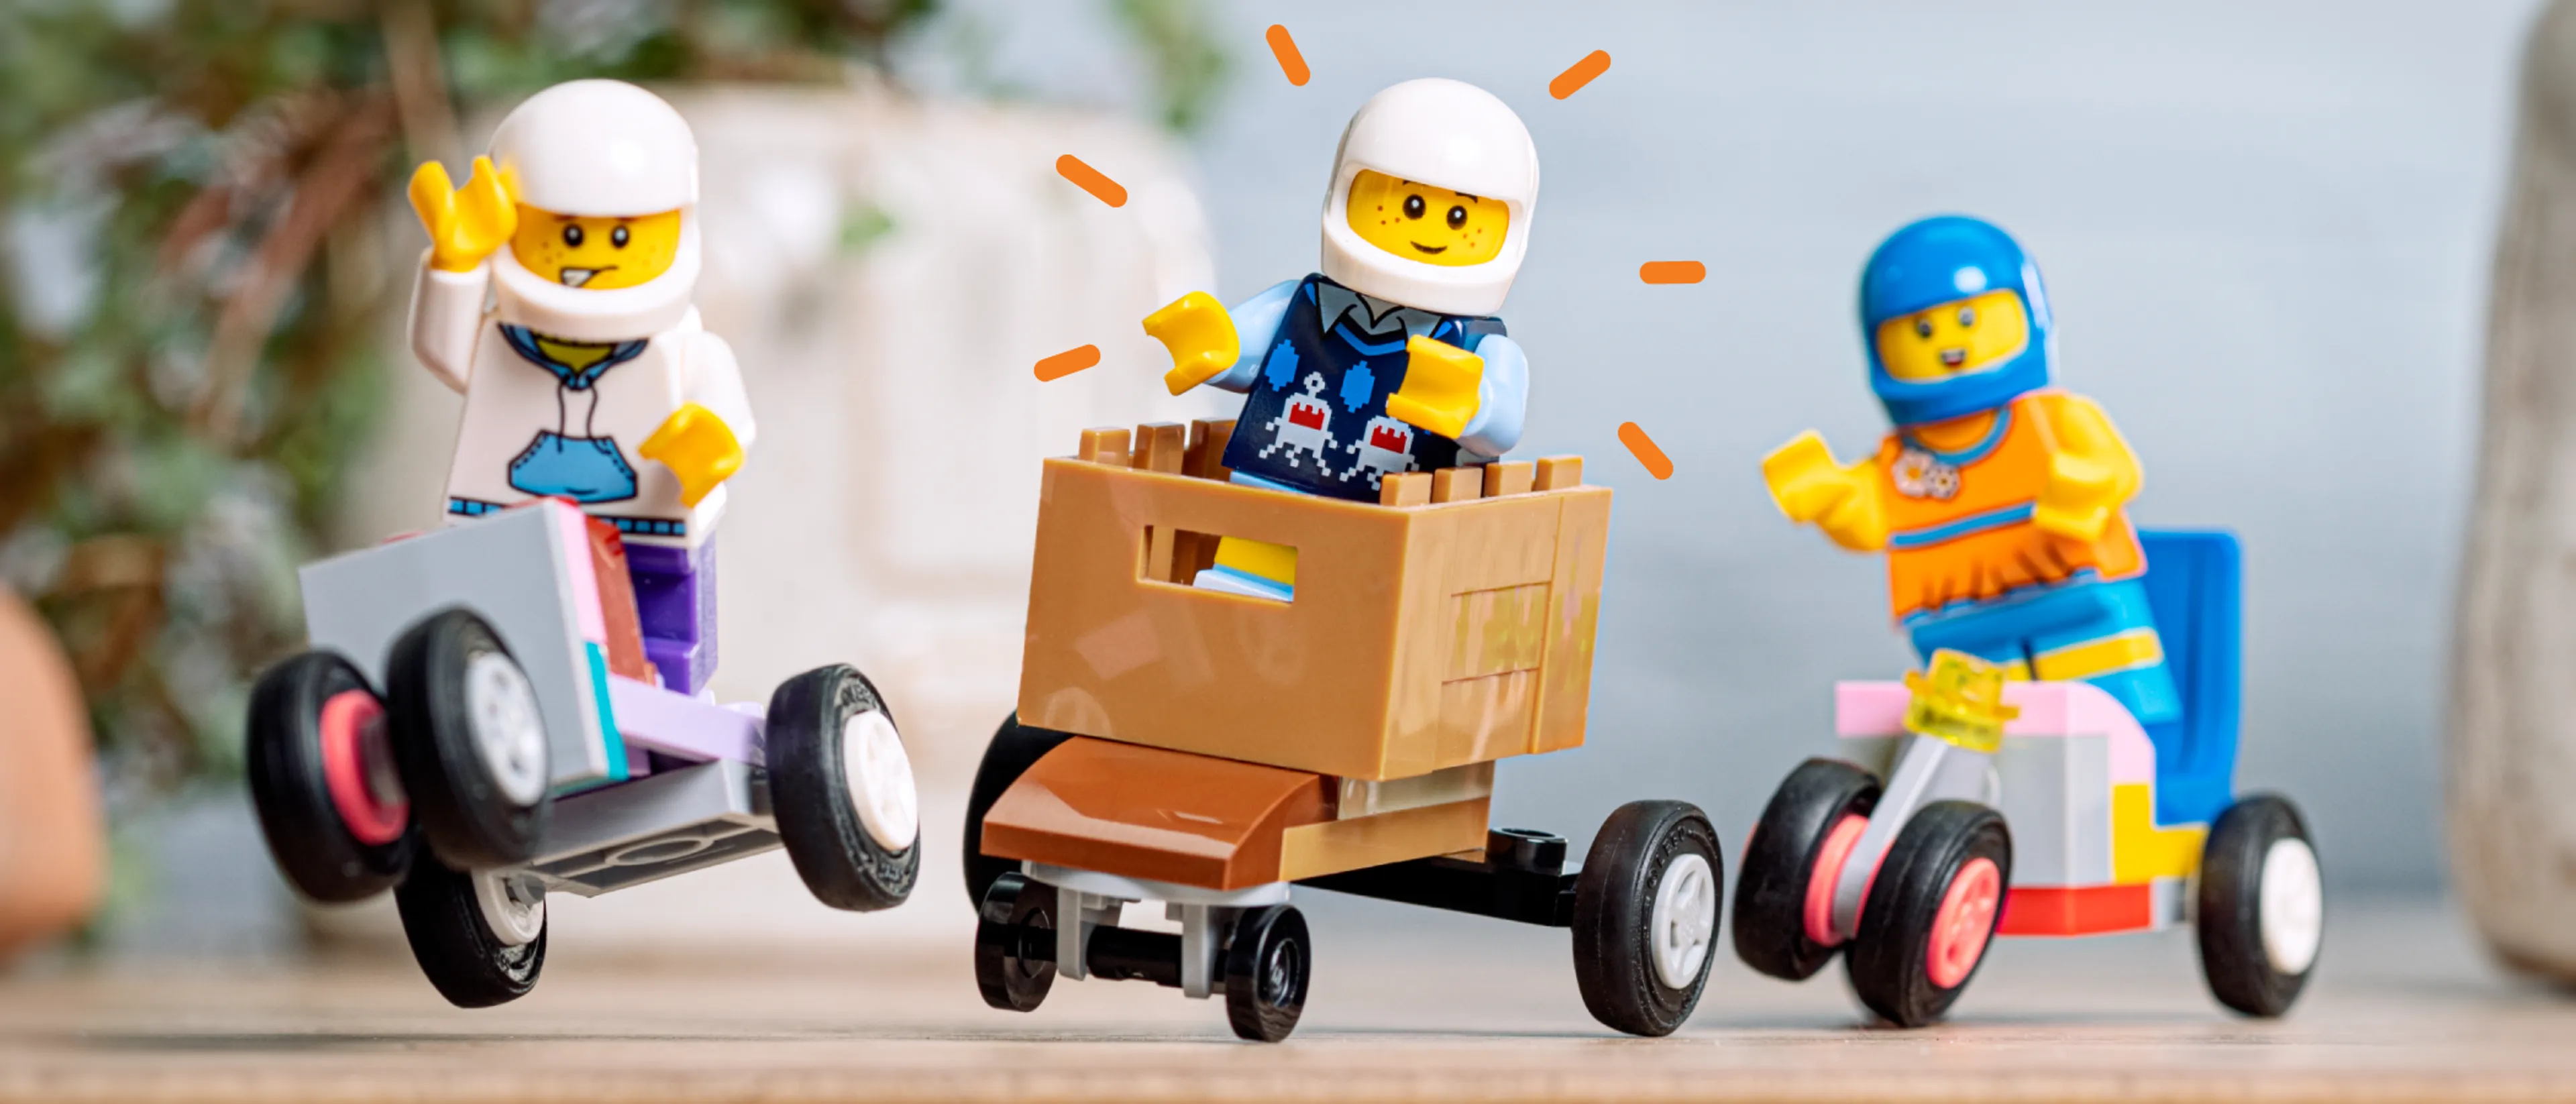 Una carrera de minifiguras LEGO